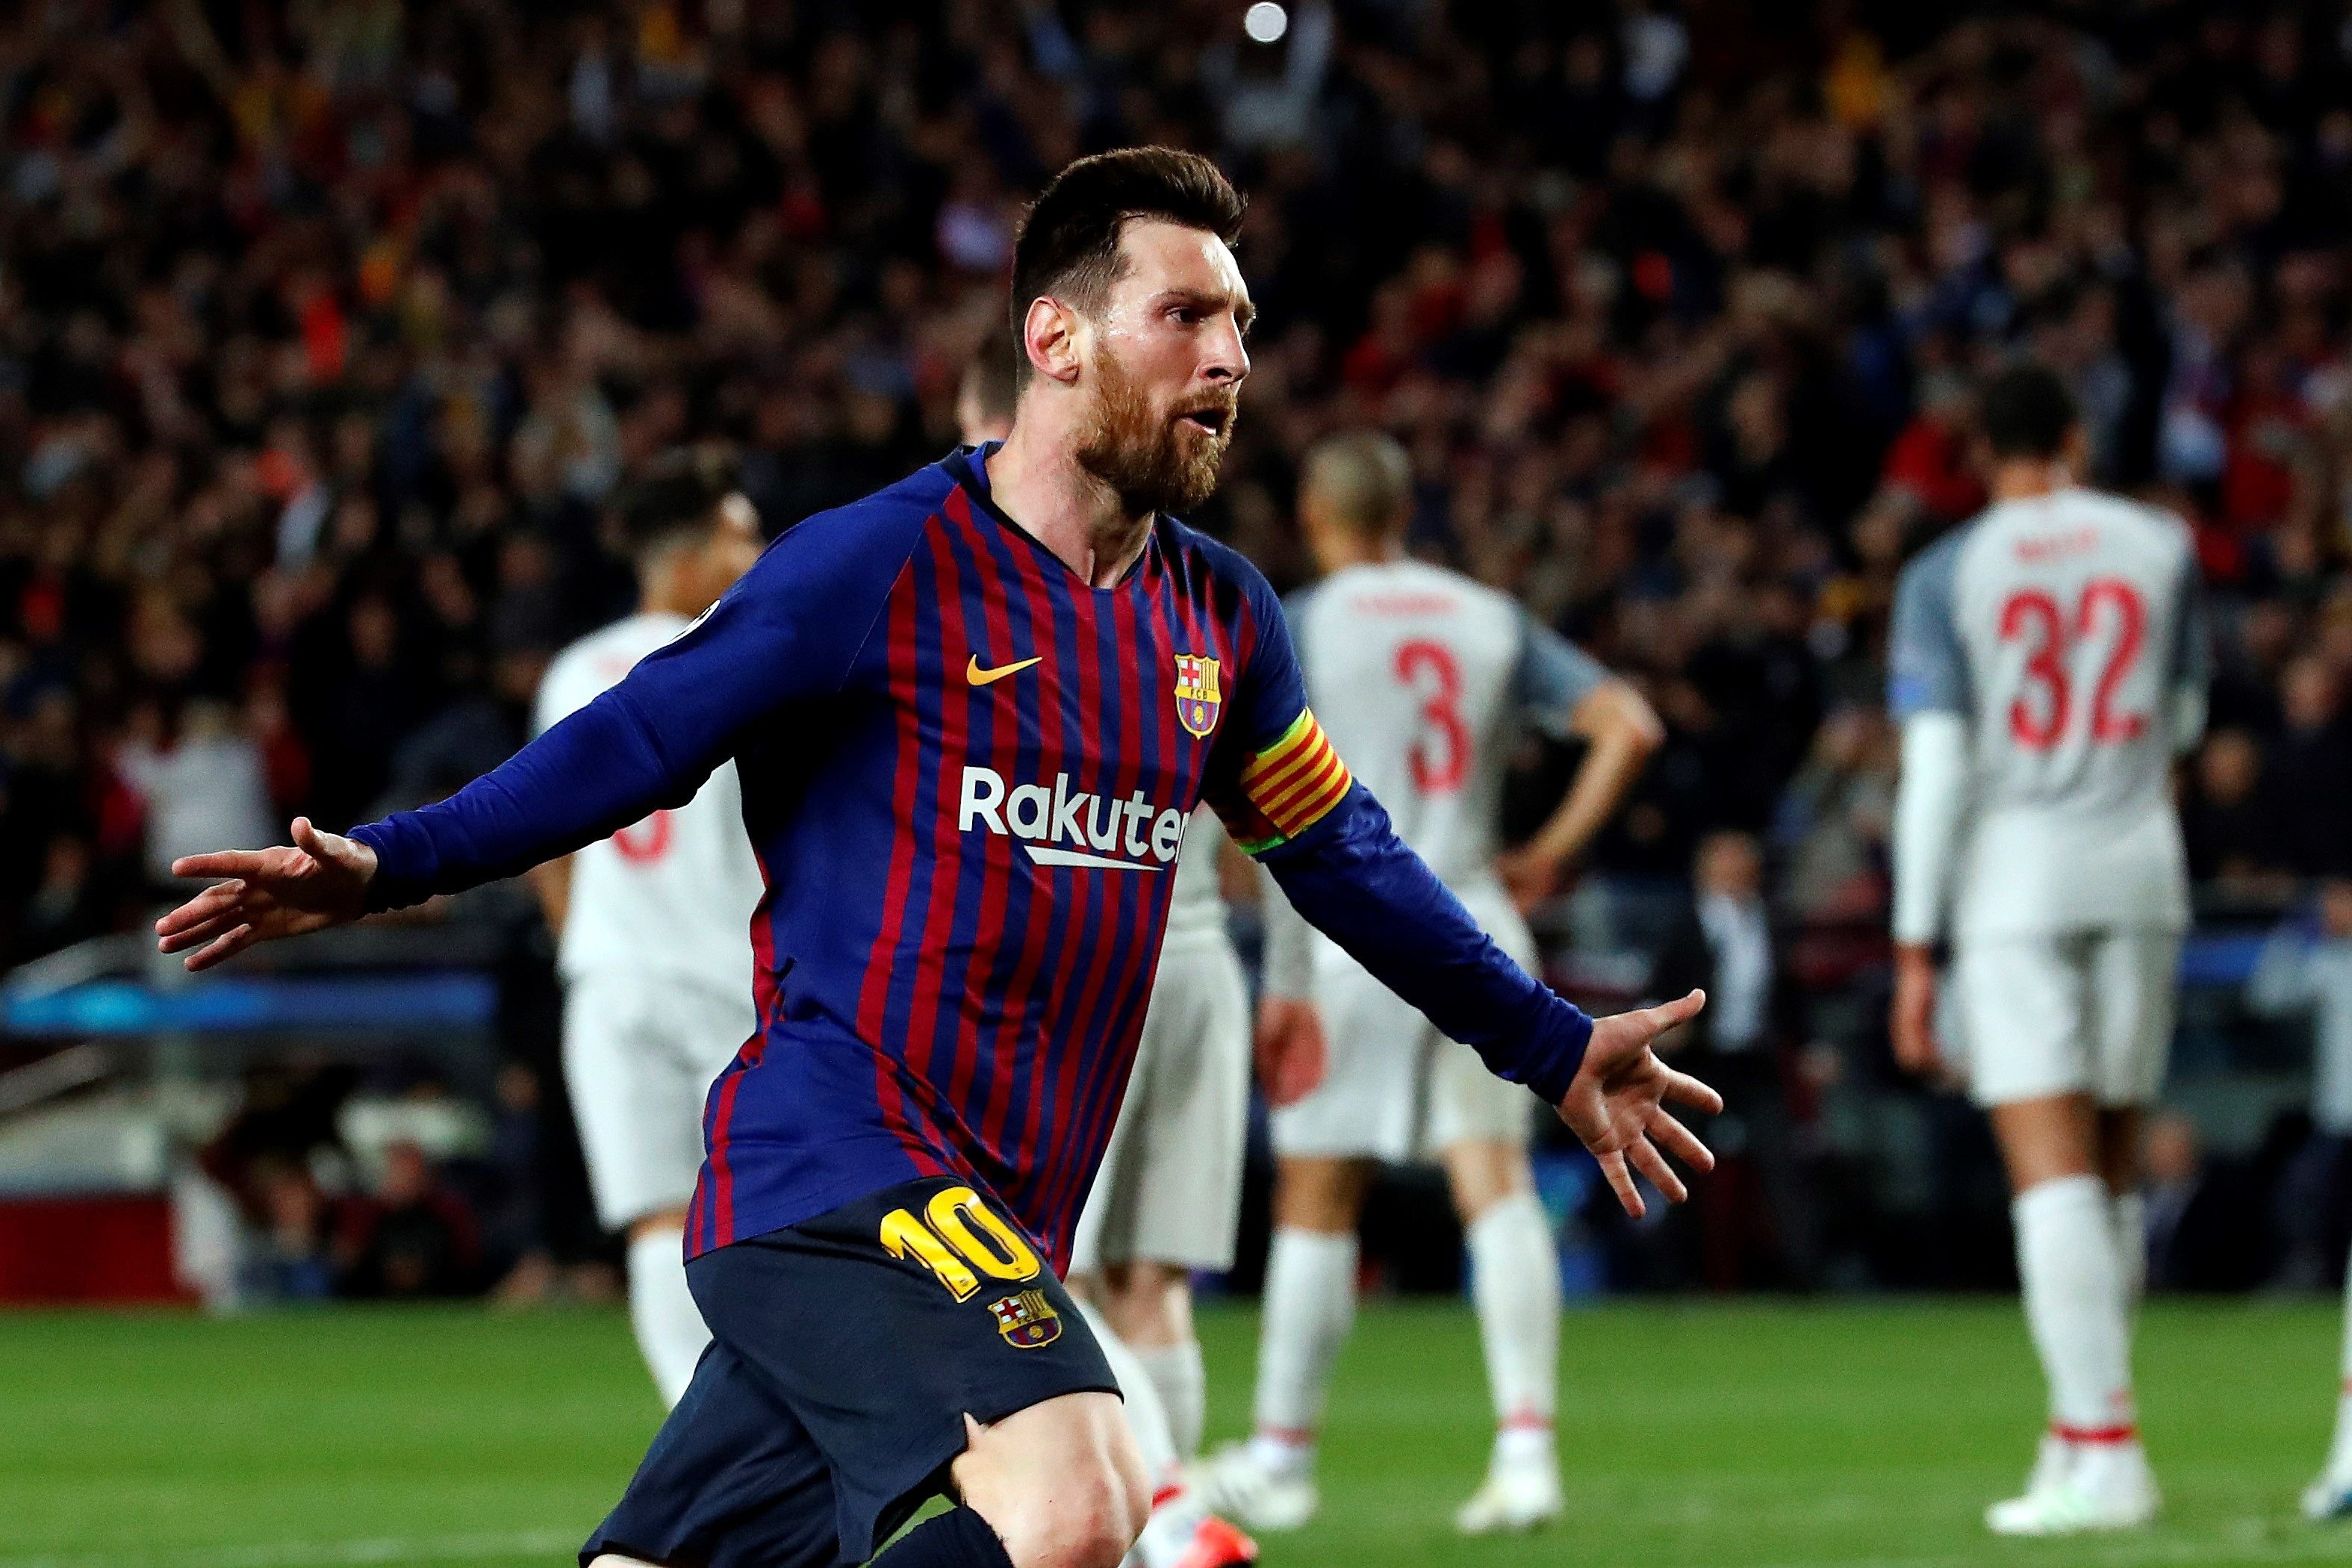 La UEFA estrena documental con la bronca de Kuipers a Messi: "Muéstrame respeto"